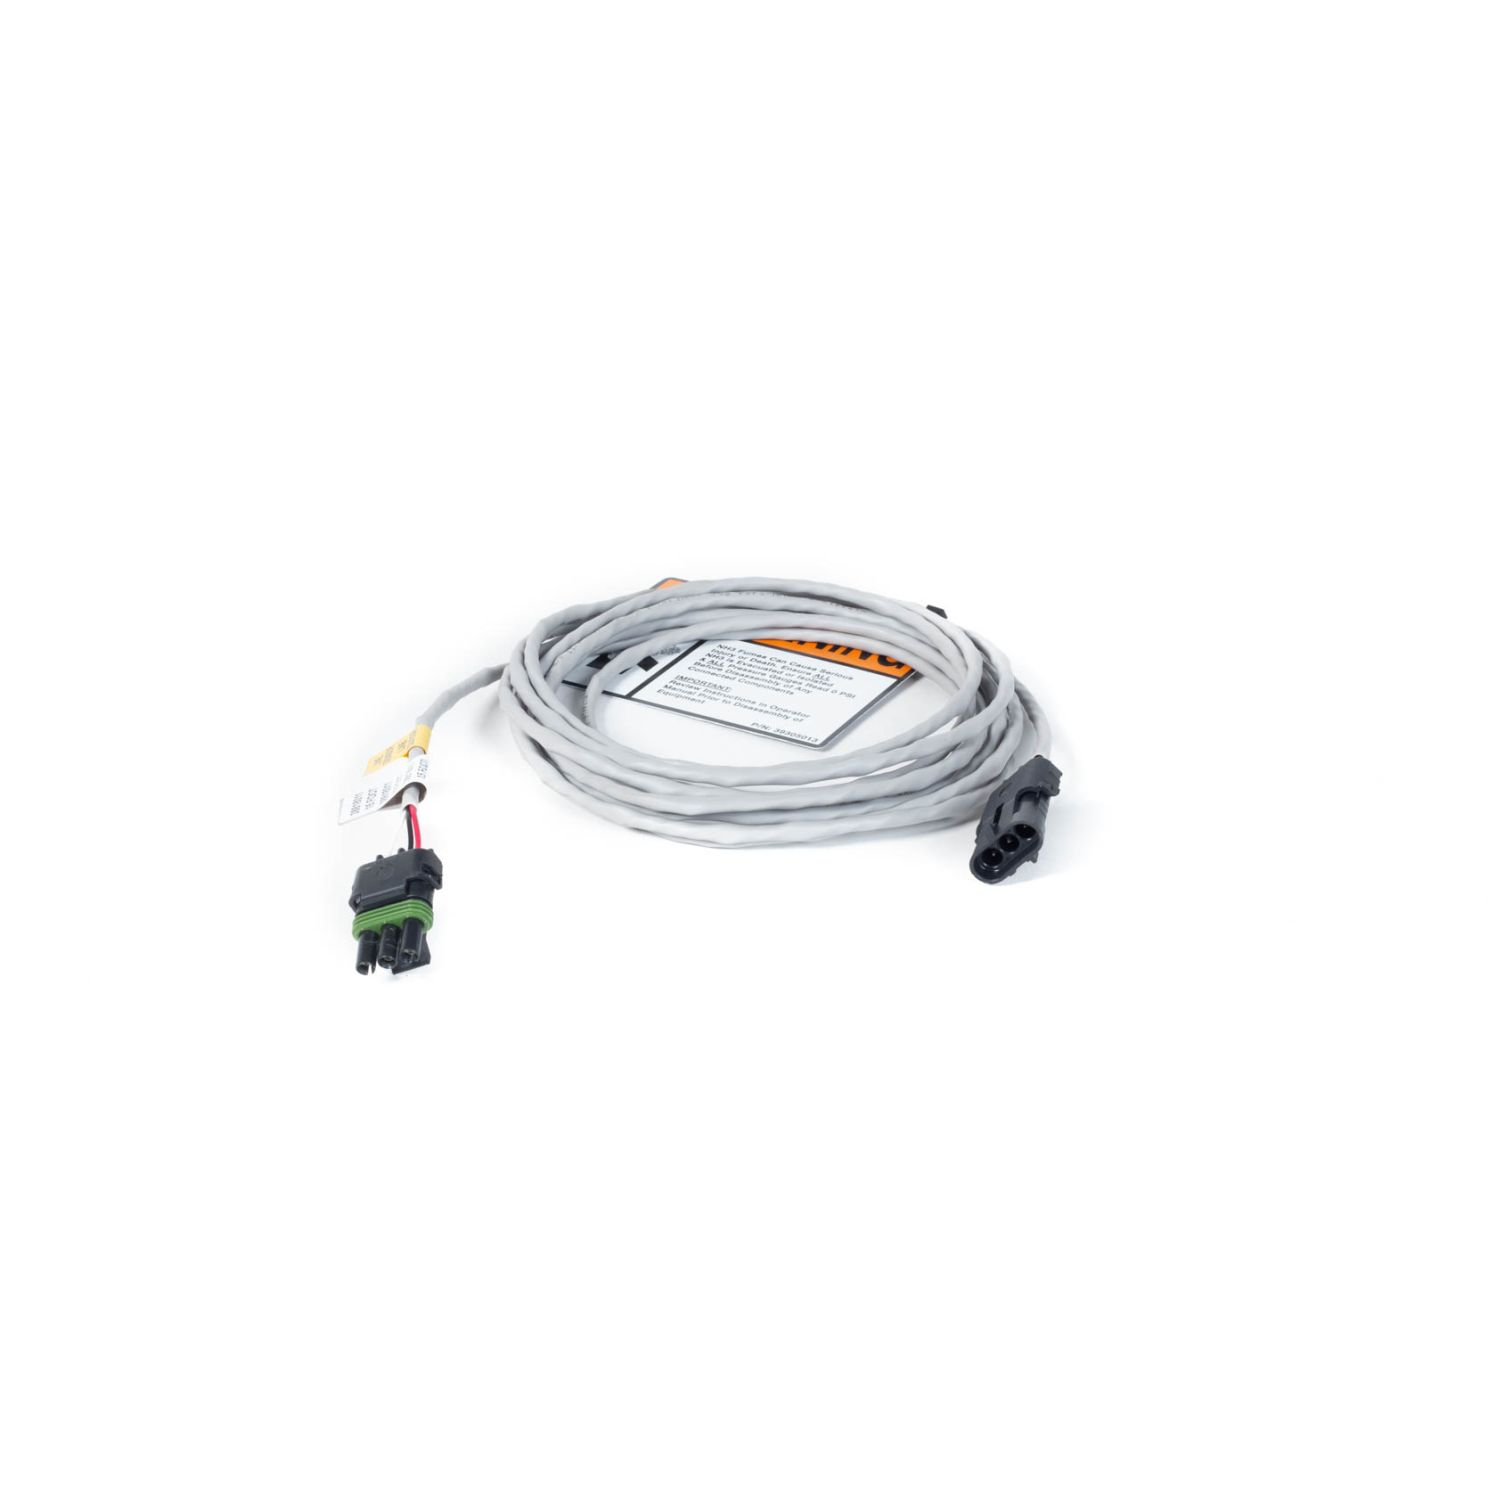 38818011 Nitro-Lert 15' NH3 Line Sensor Extension Cable